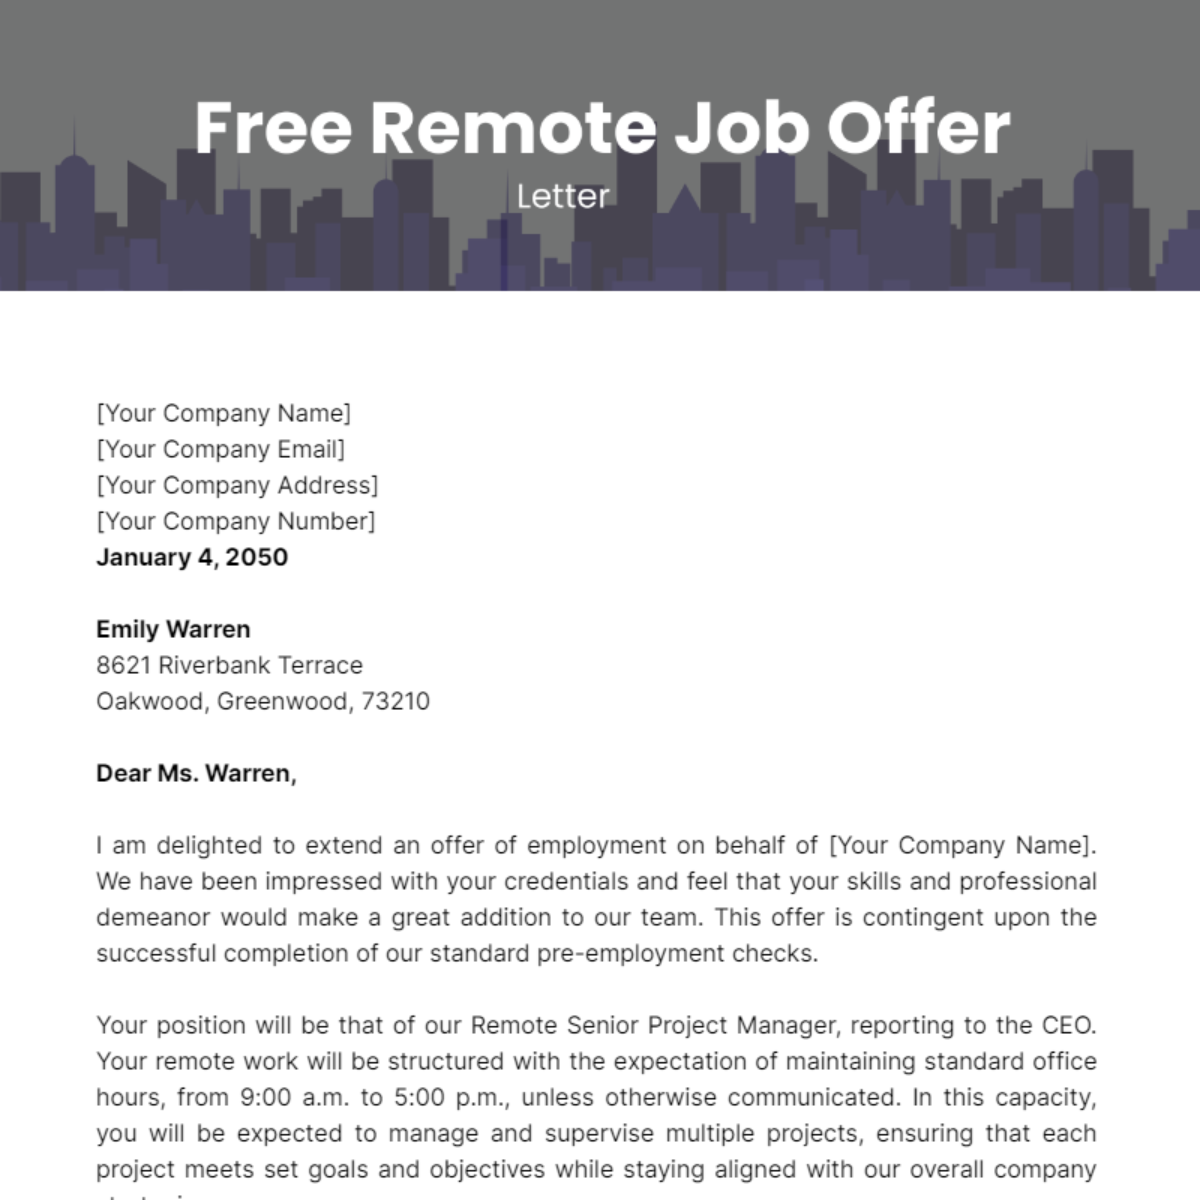 Remote Job Offer Letter Template